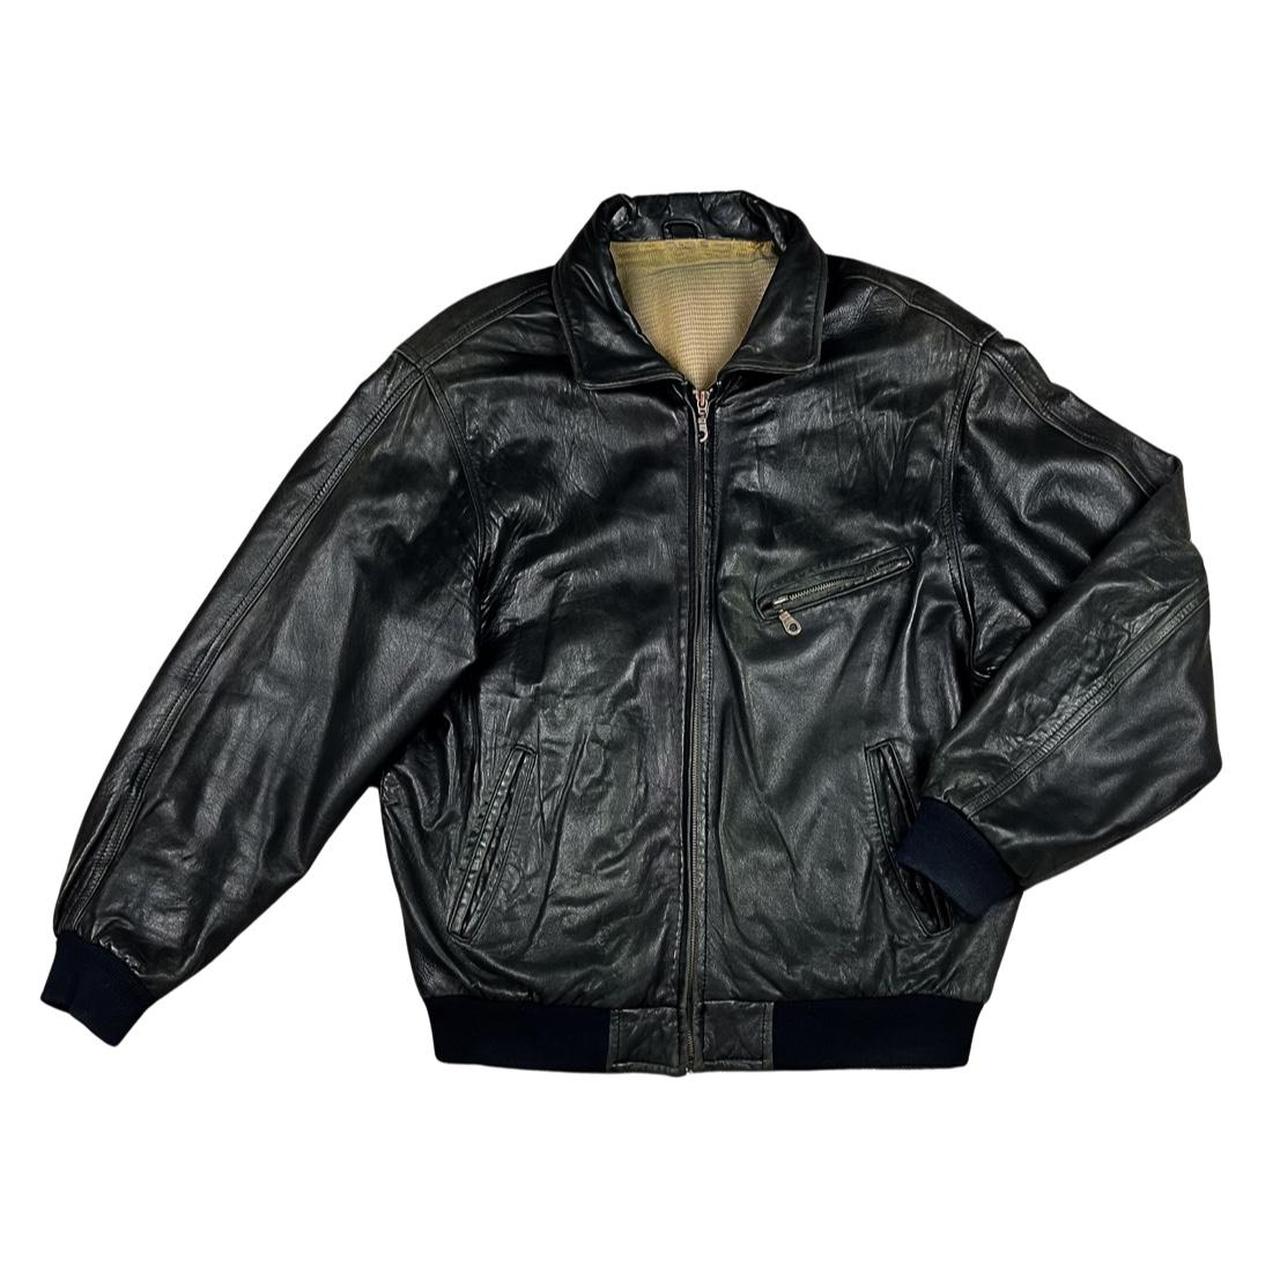 Vintage 90s leather jacket condition 7/10 some... - Depop